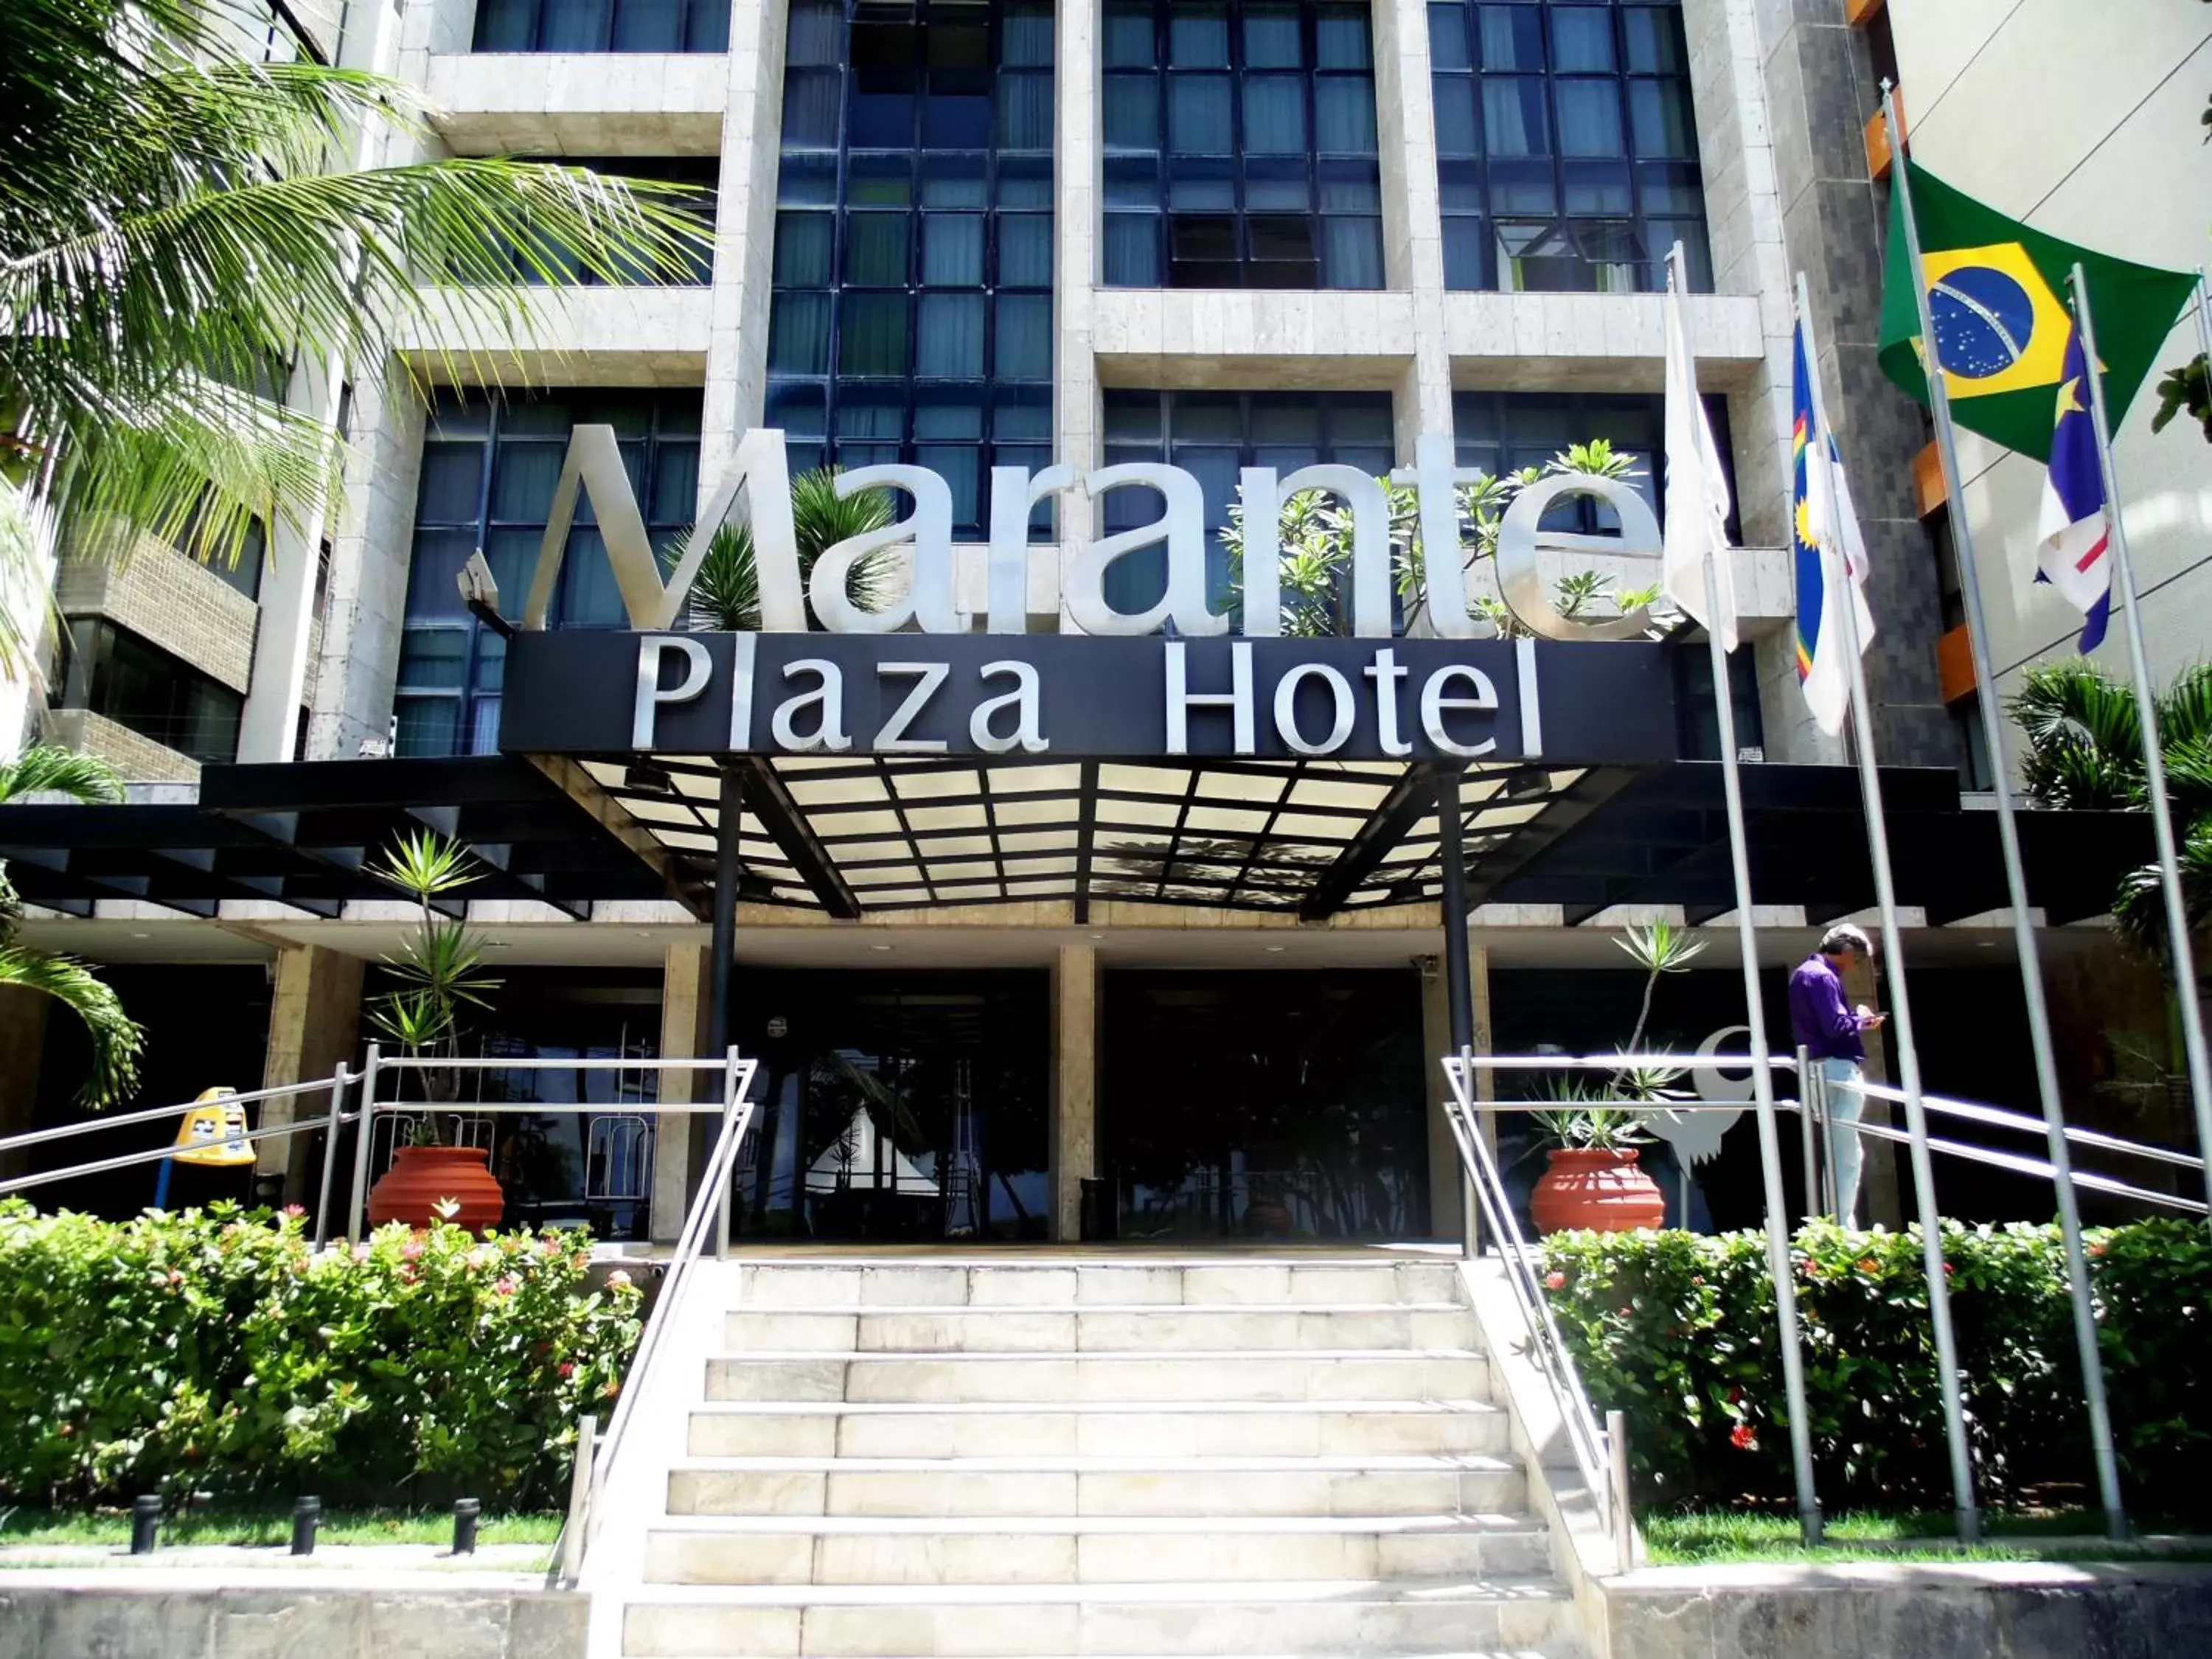 Facade/entrance, Property Building in Marante Plaza Hotel